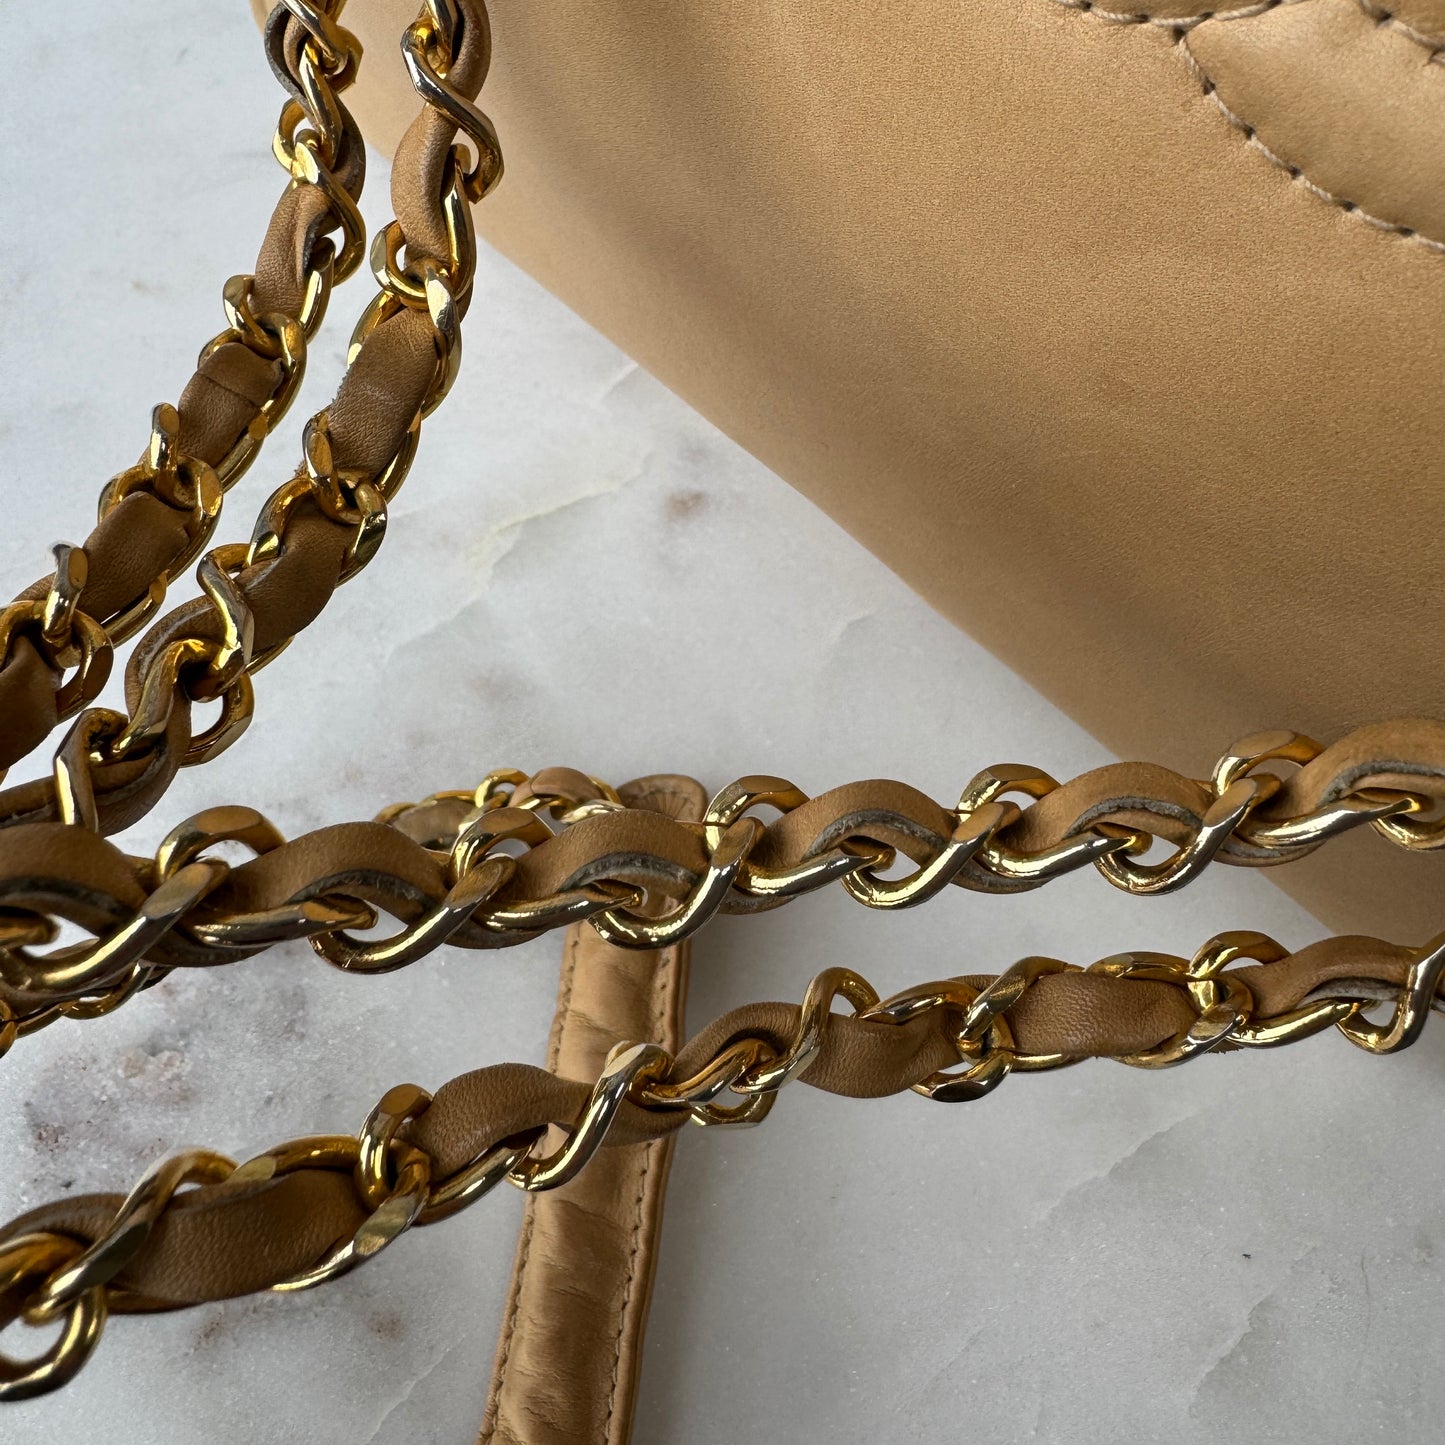 Chanel Vintage CC Chain Leather Shoulder Bag